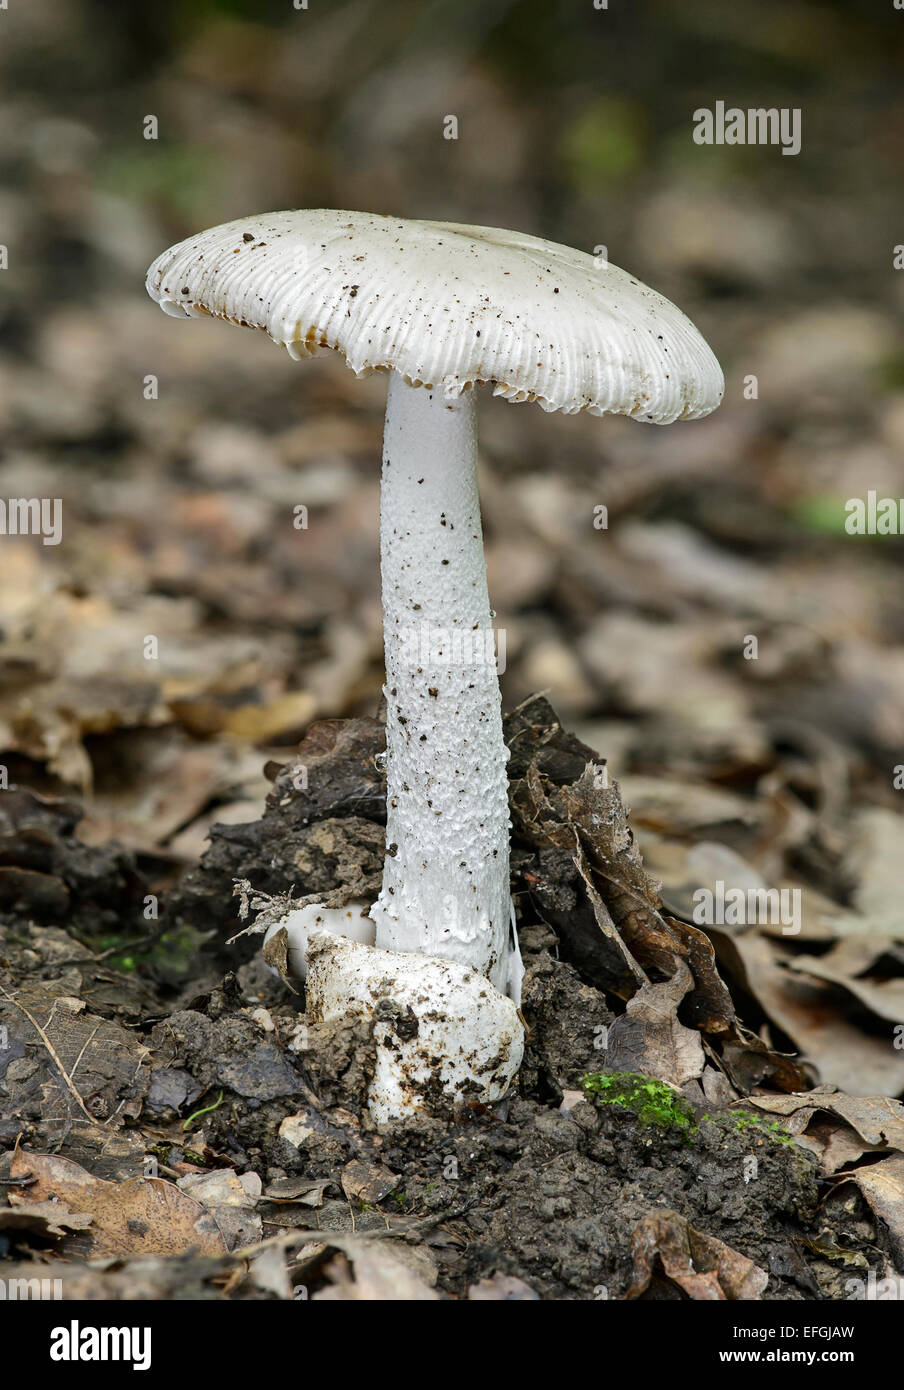 Volvariella mushroom (Volvariella spec.) with the typical volva at the stem base, saprobiont, inedible, Switzerland Stock Photo